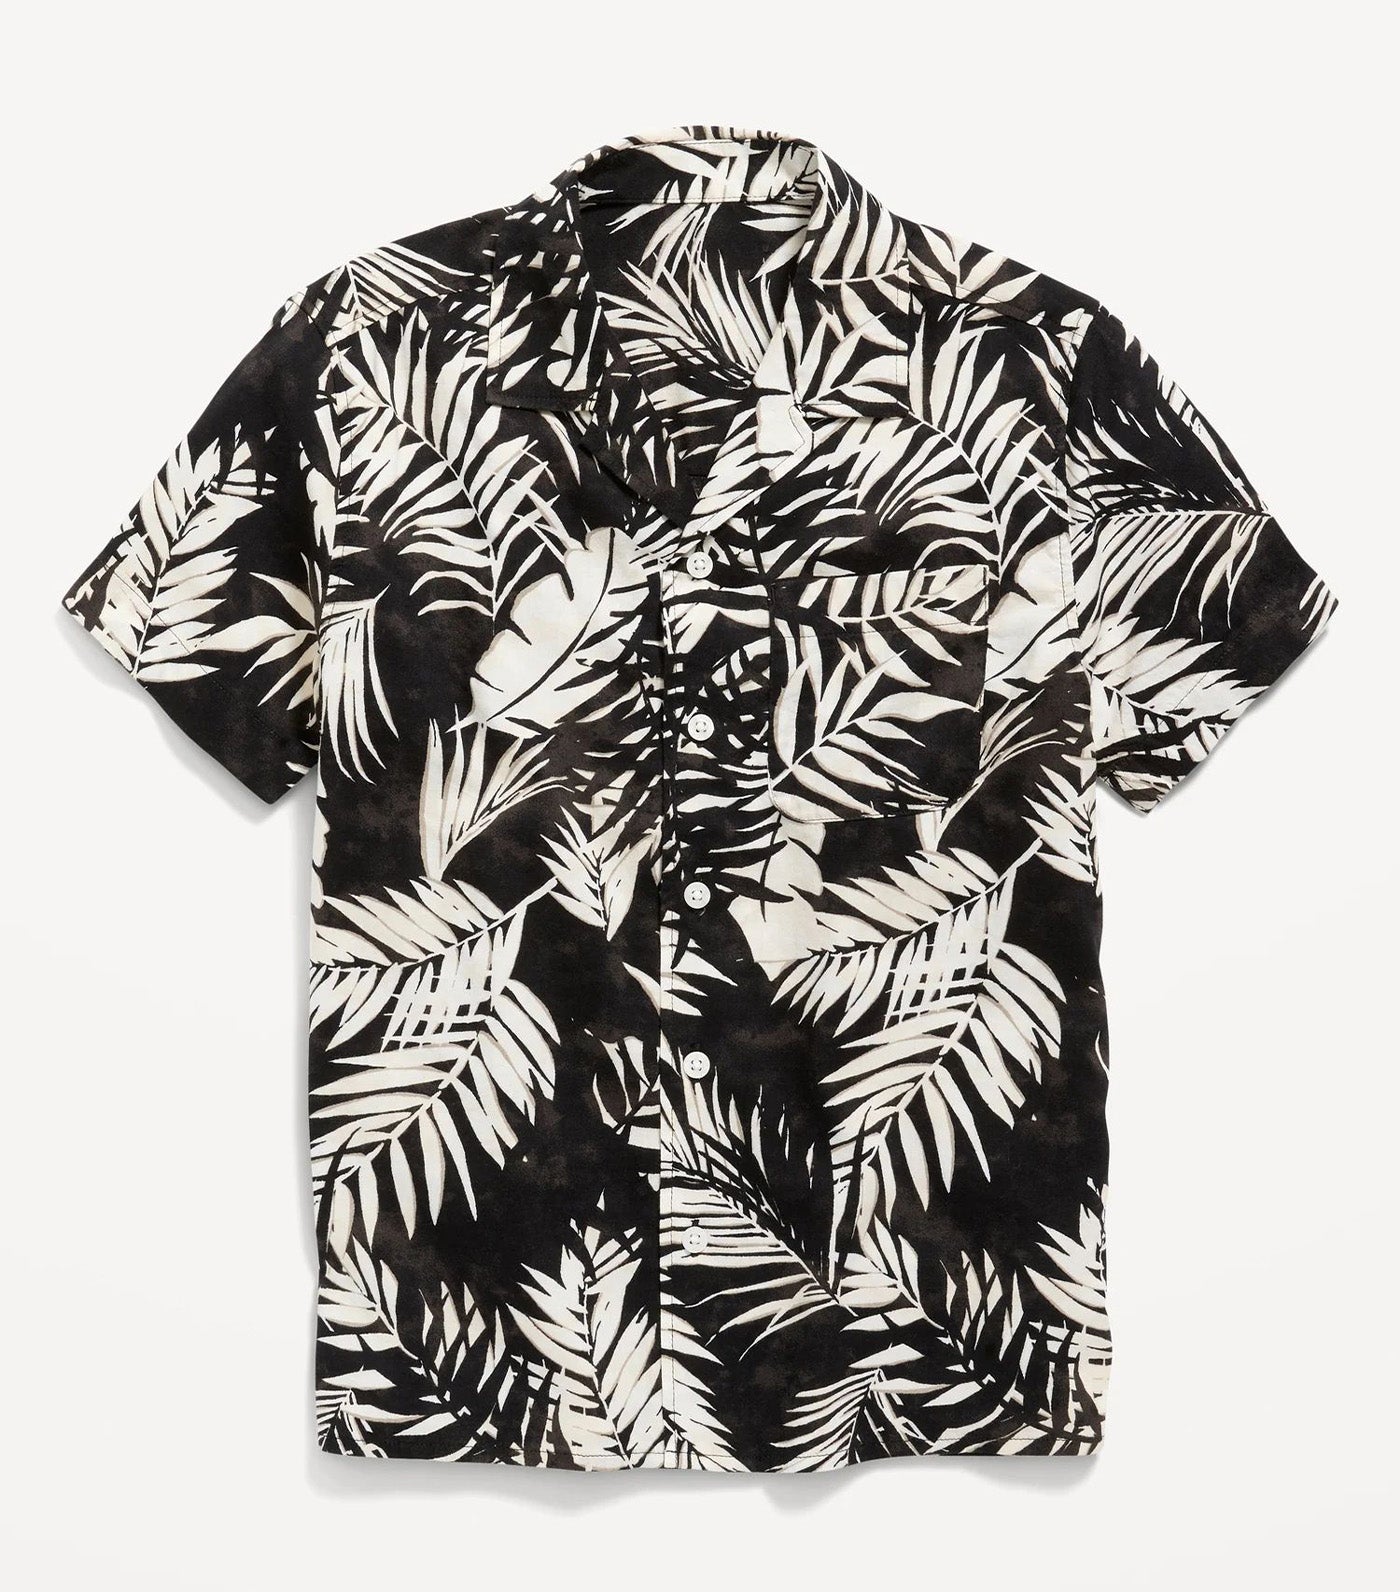 Short-Sleeve Printed Camp Shirt for Boys - Black Floral